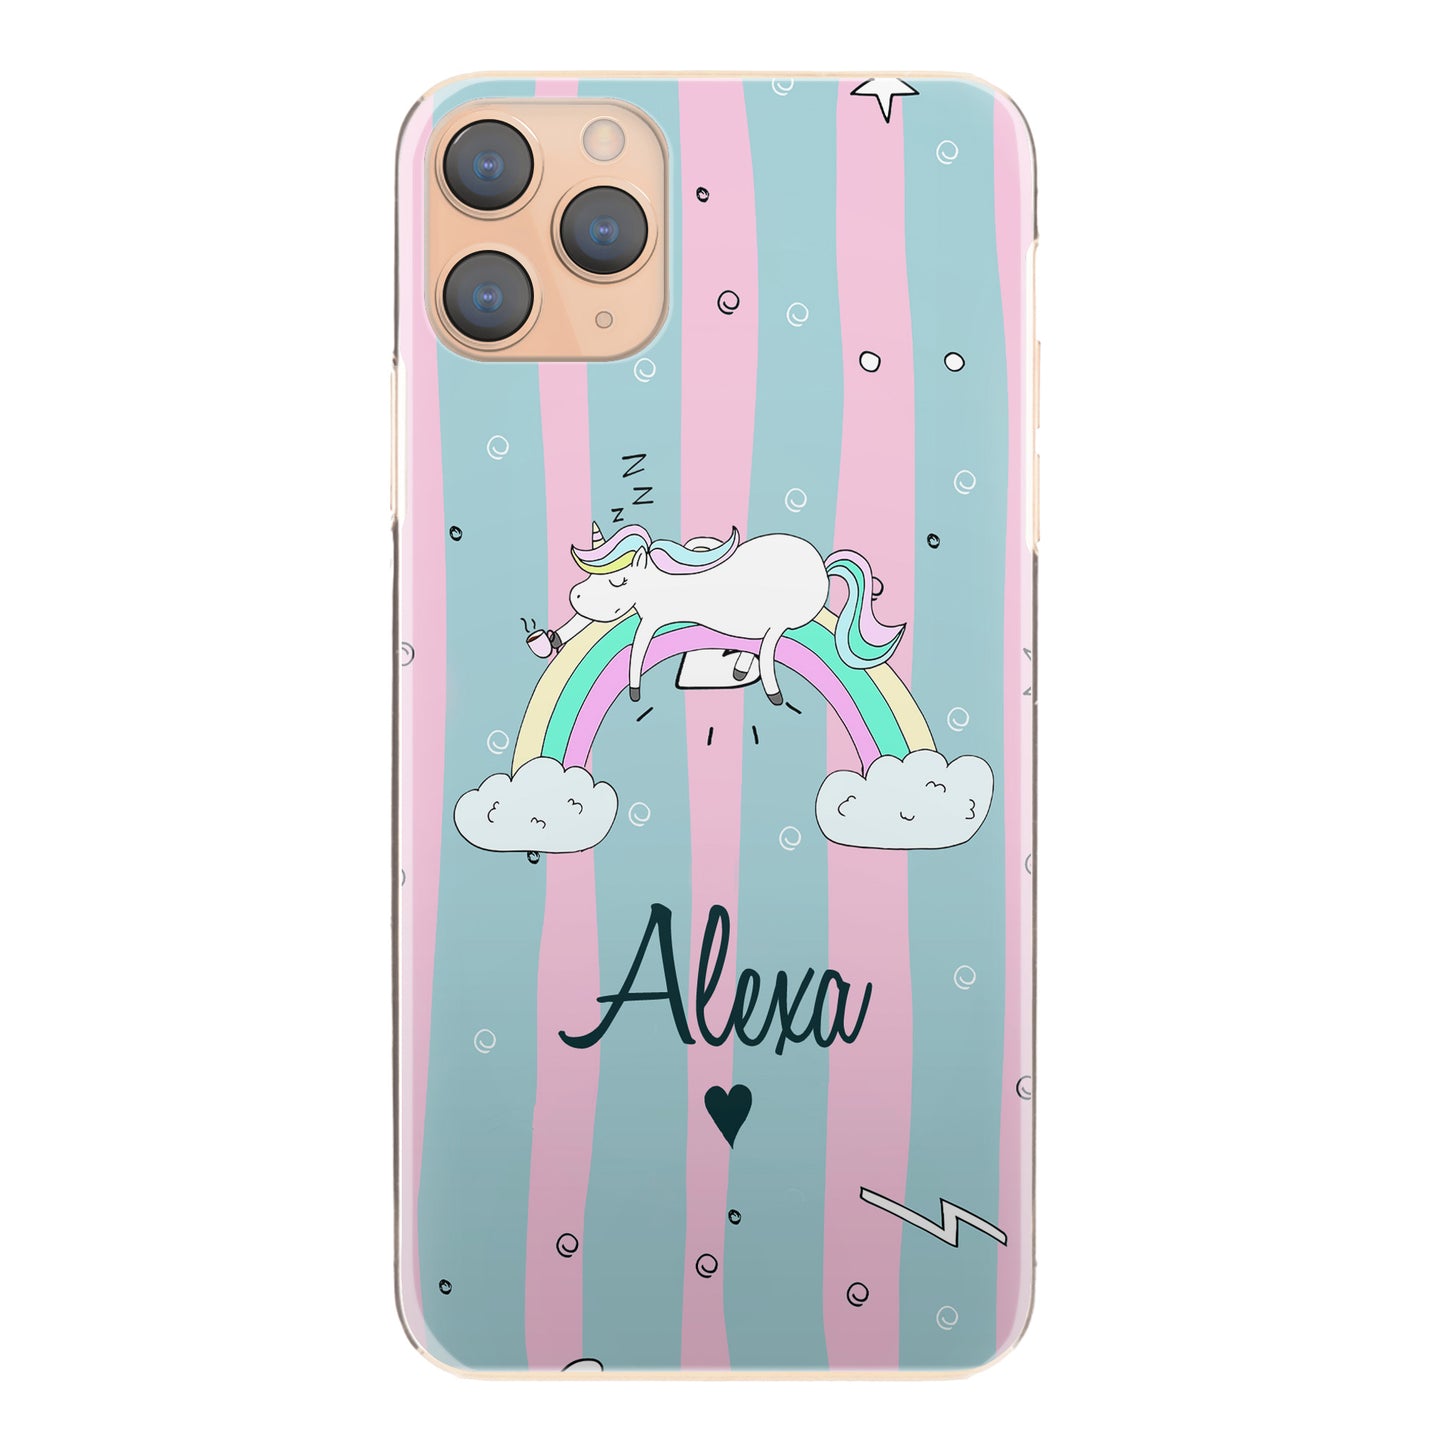 Personalised HTC Phone Hard Case with Sleeping Unicorn and Rainbow on Cartoon Stripes